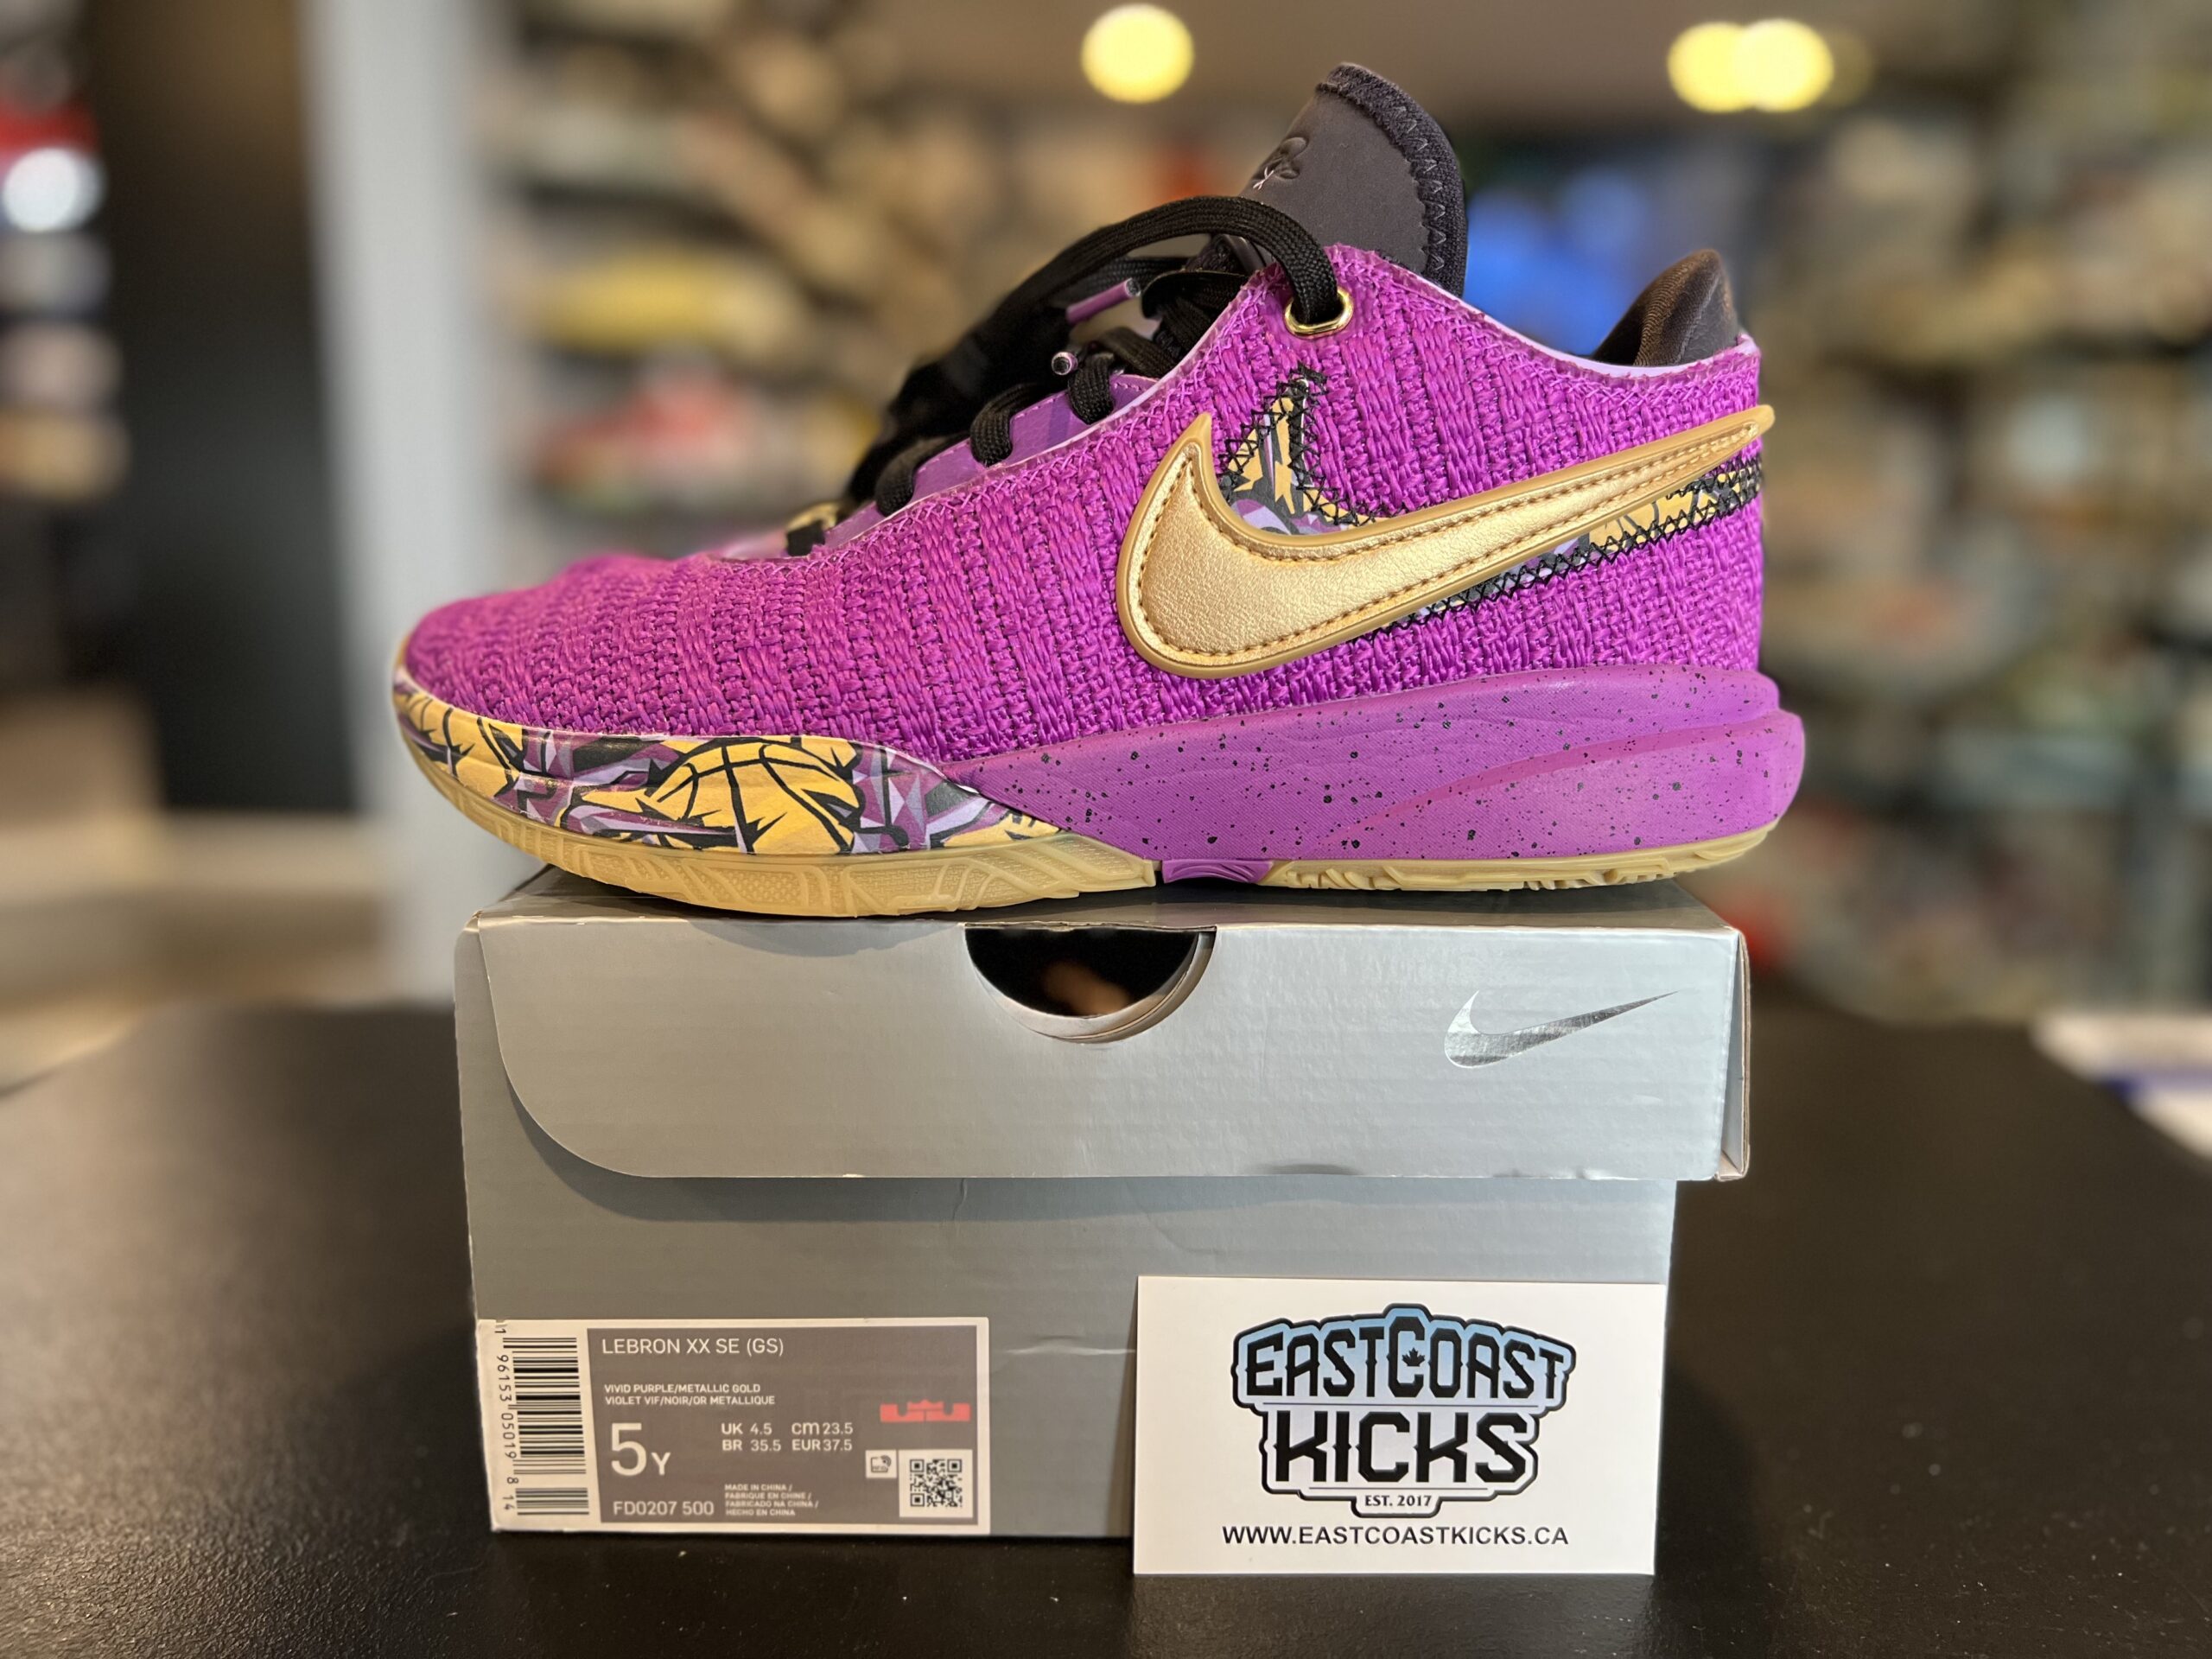 Preowned Nike LeBron 20 SE Vivid Purple Size 5Y